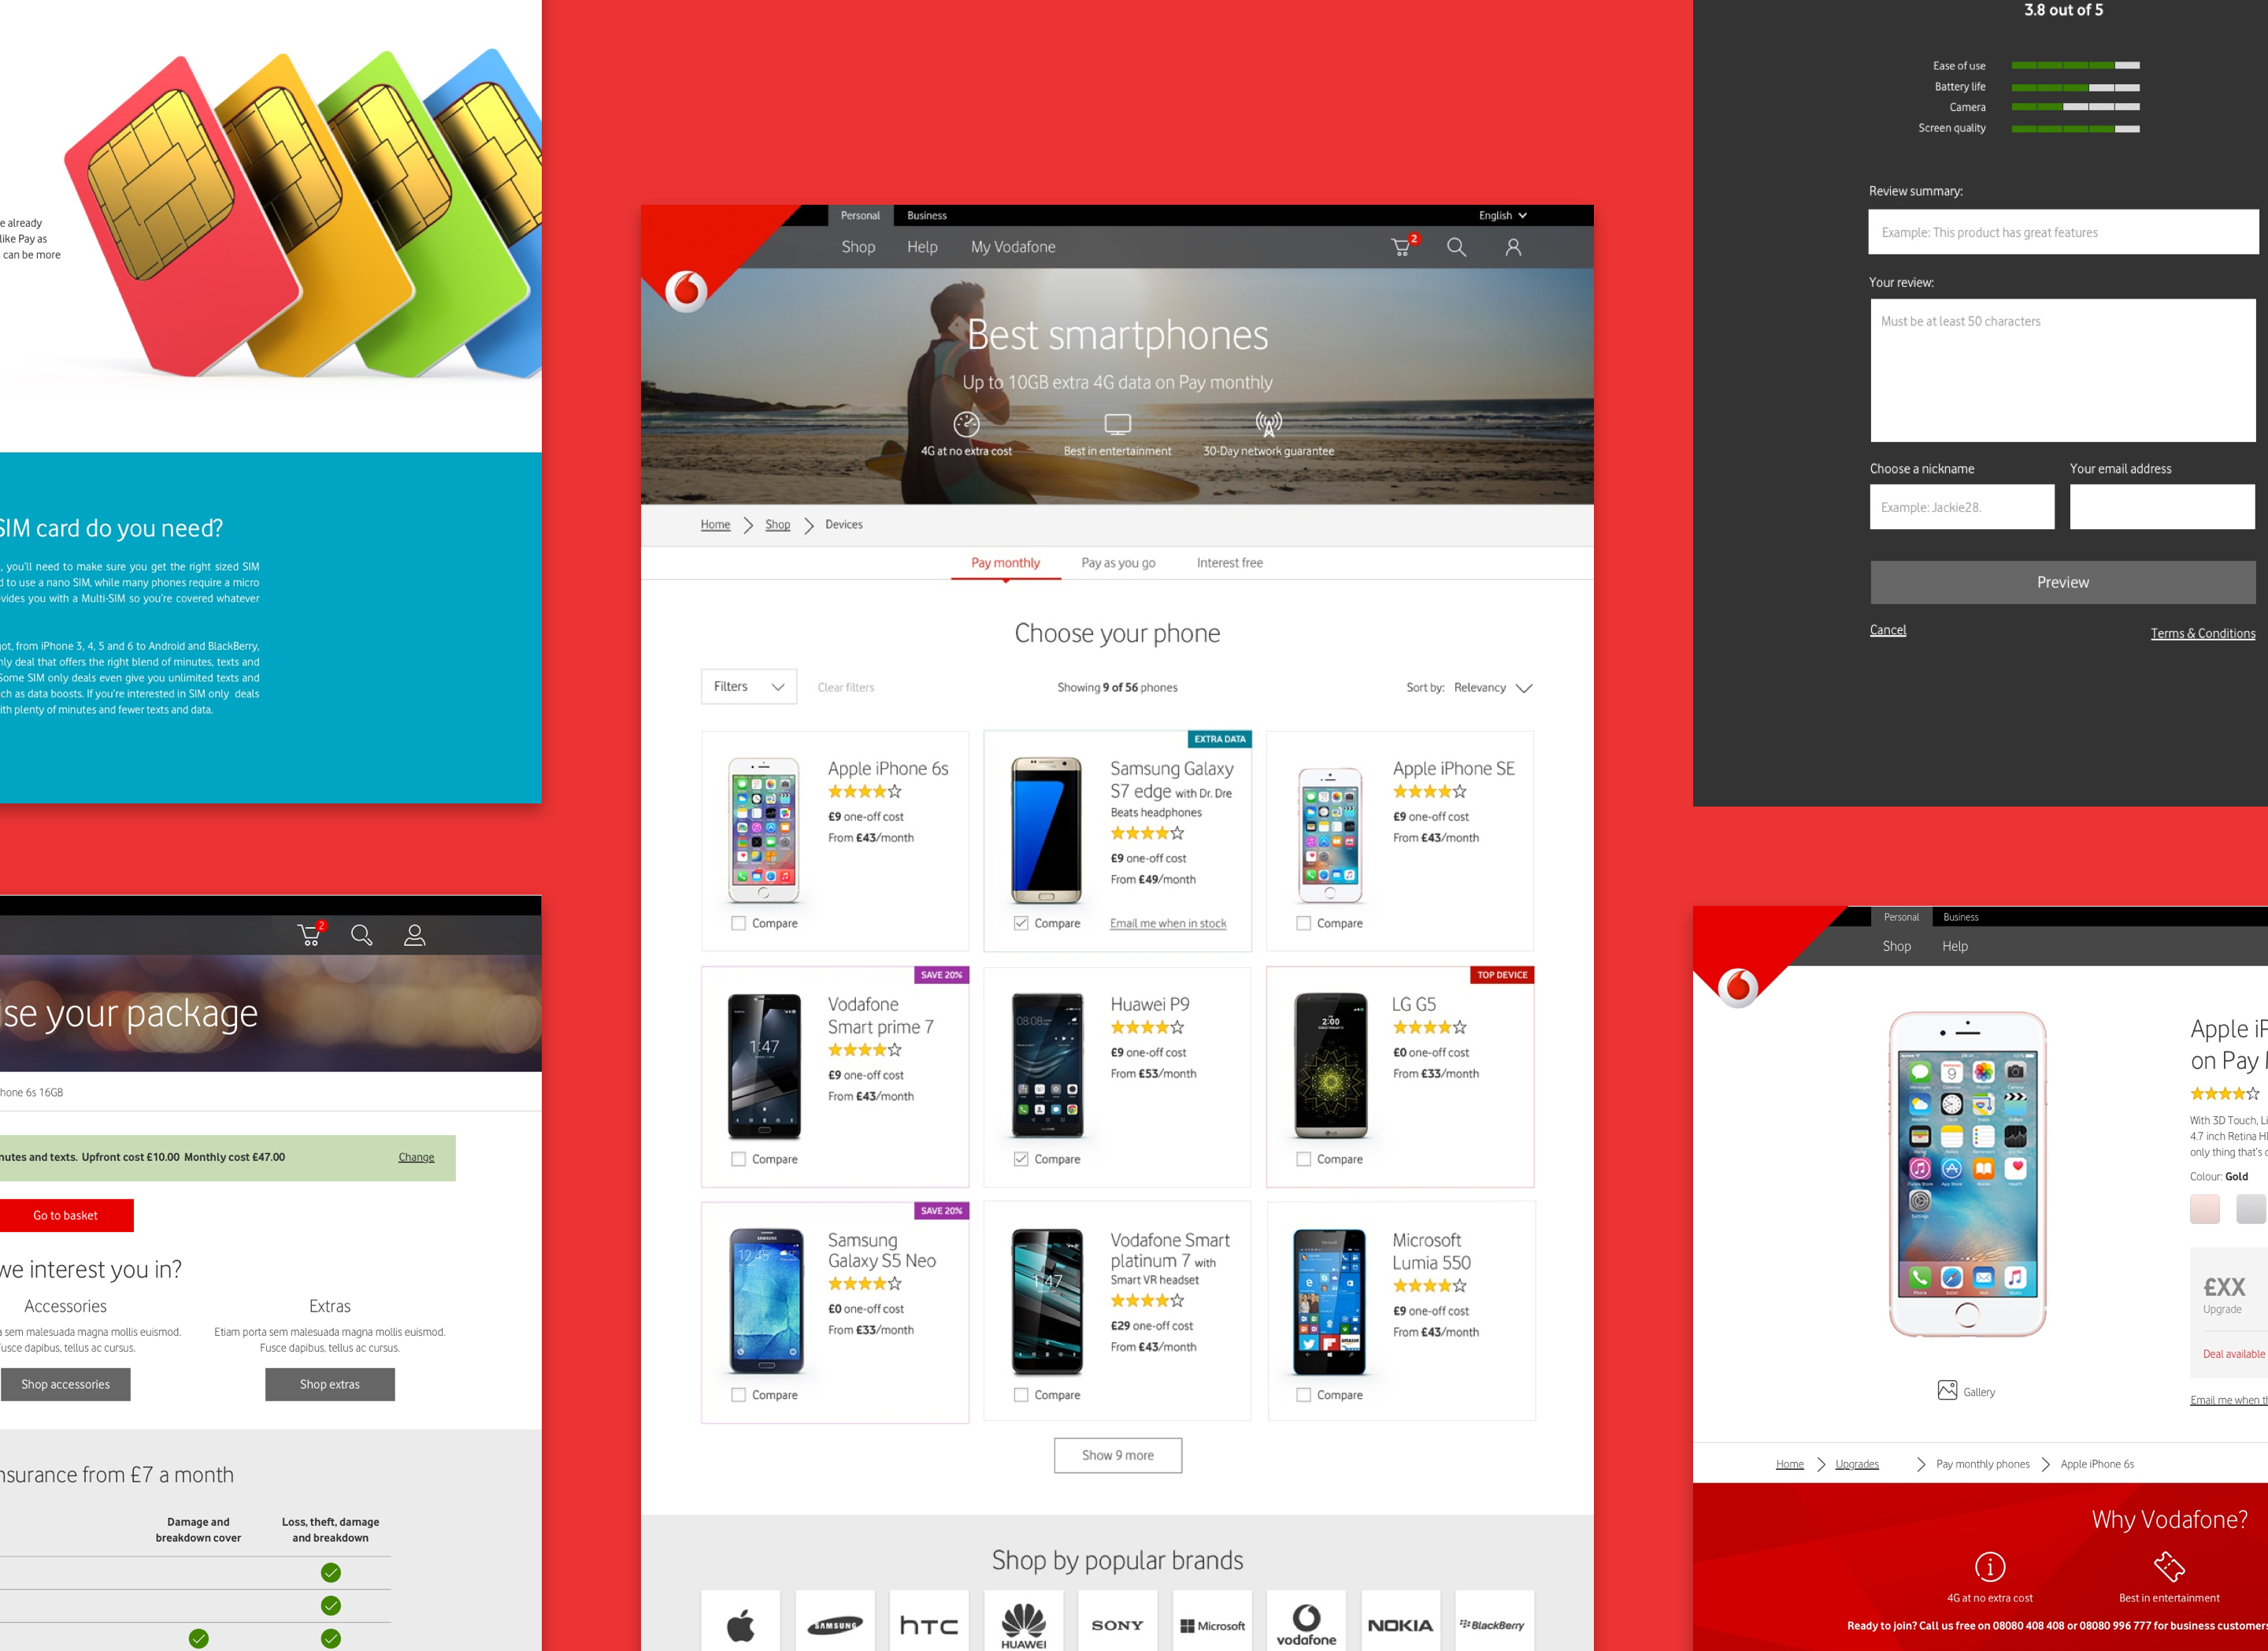 Vodafone Web Page Designs